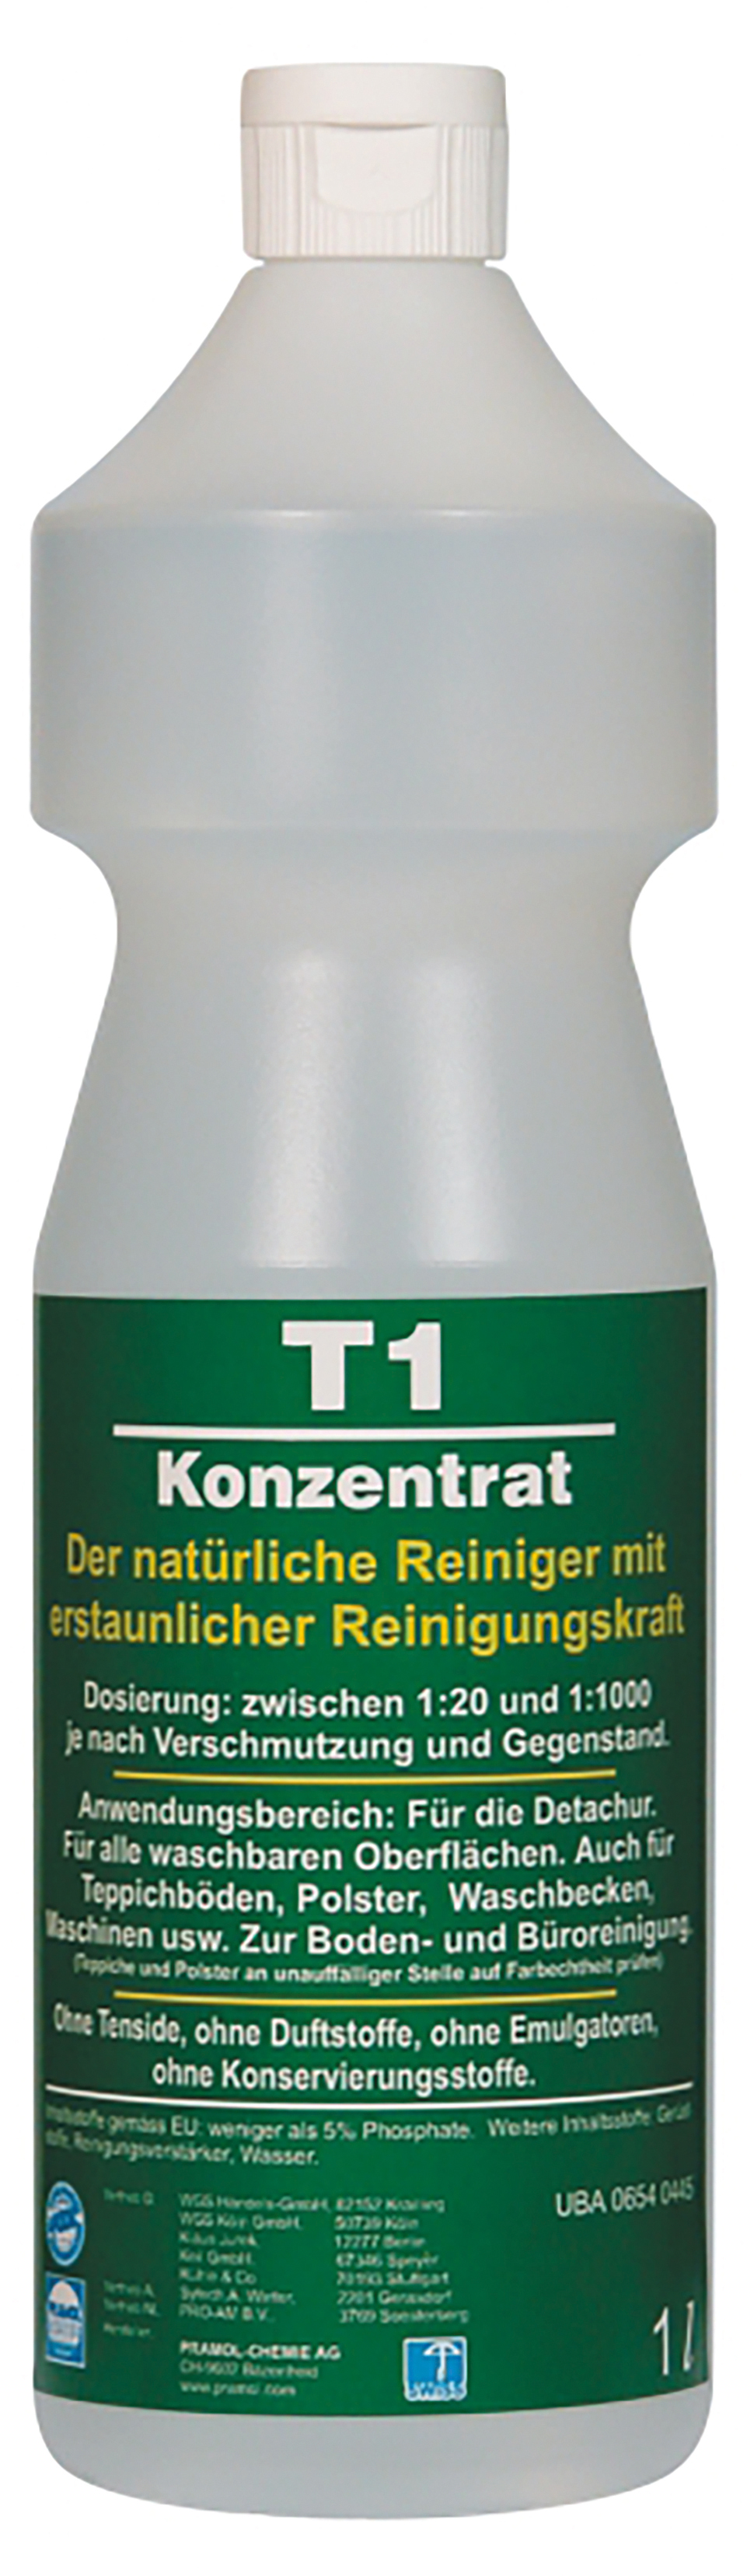 T1 Konzentrat, tensidfreier Reiniger, 1 Flasche, 1 Liter